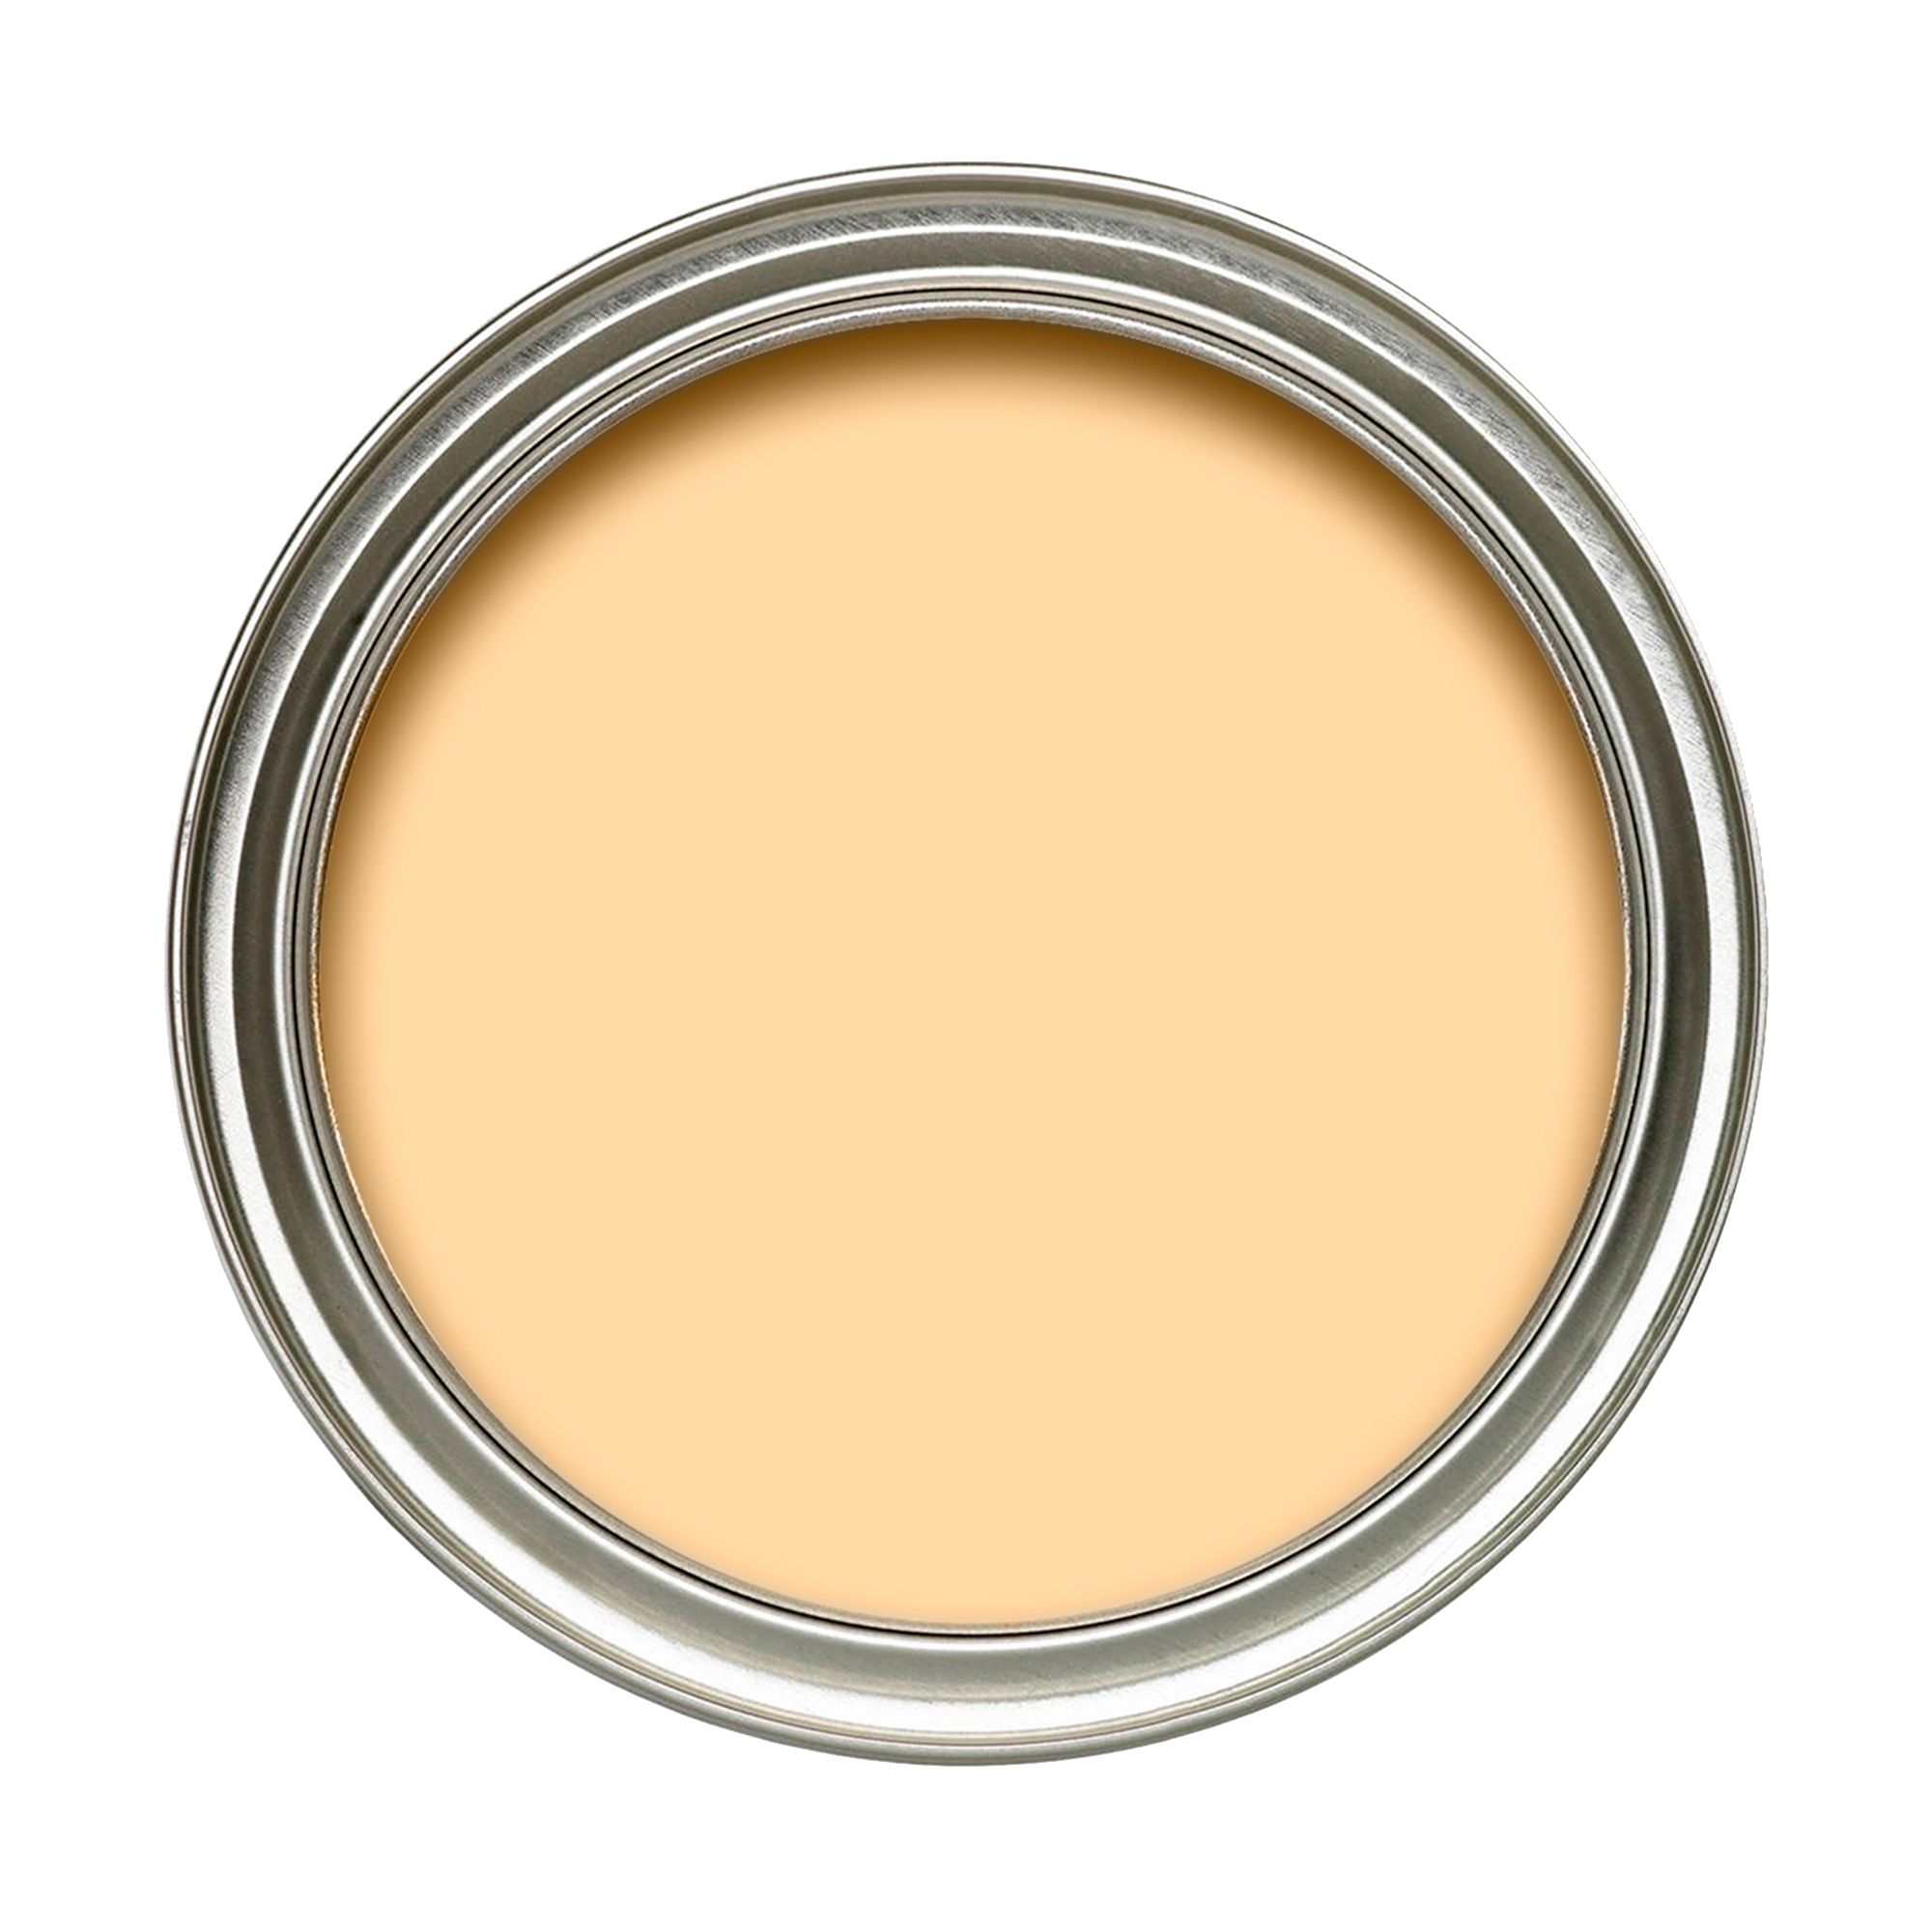 Dulux Easycare Morning glow Soft sheen Emulsion paint, 2.5L